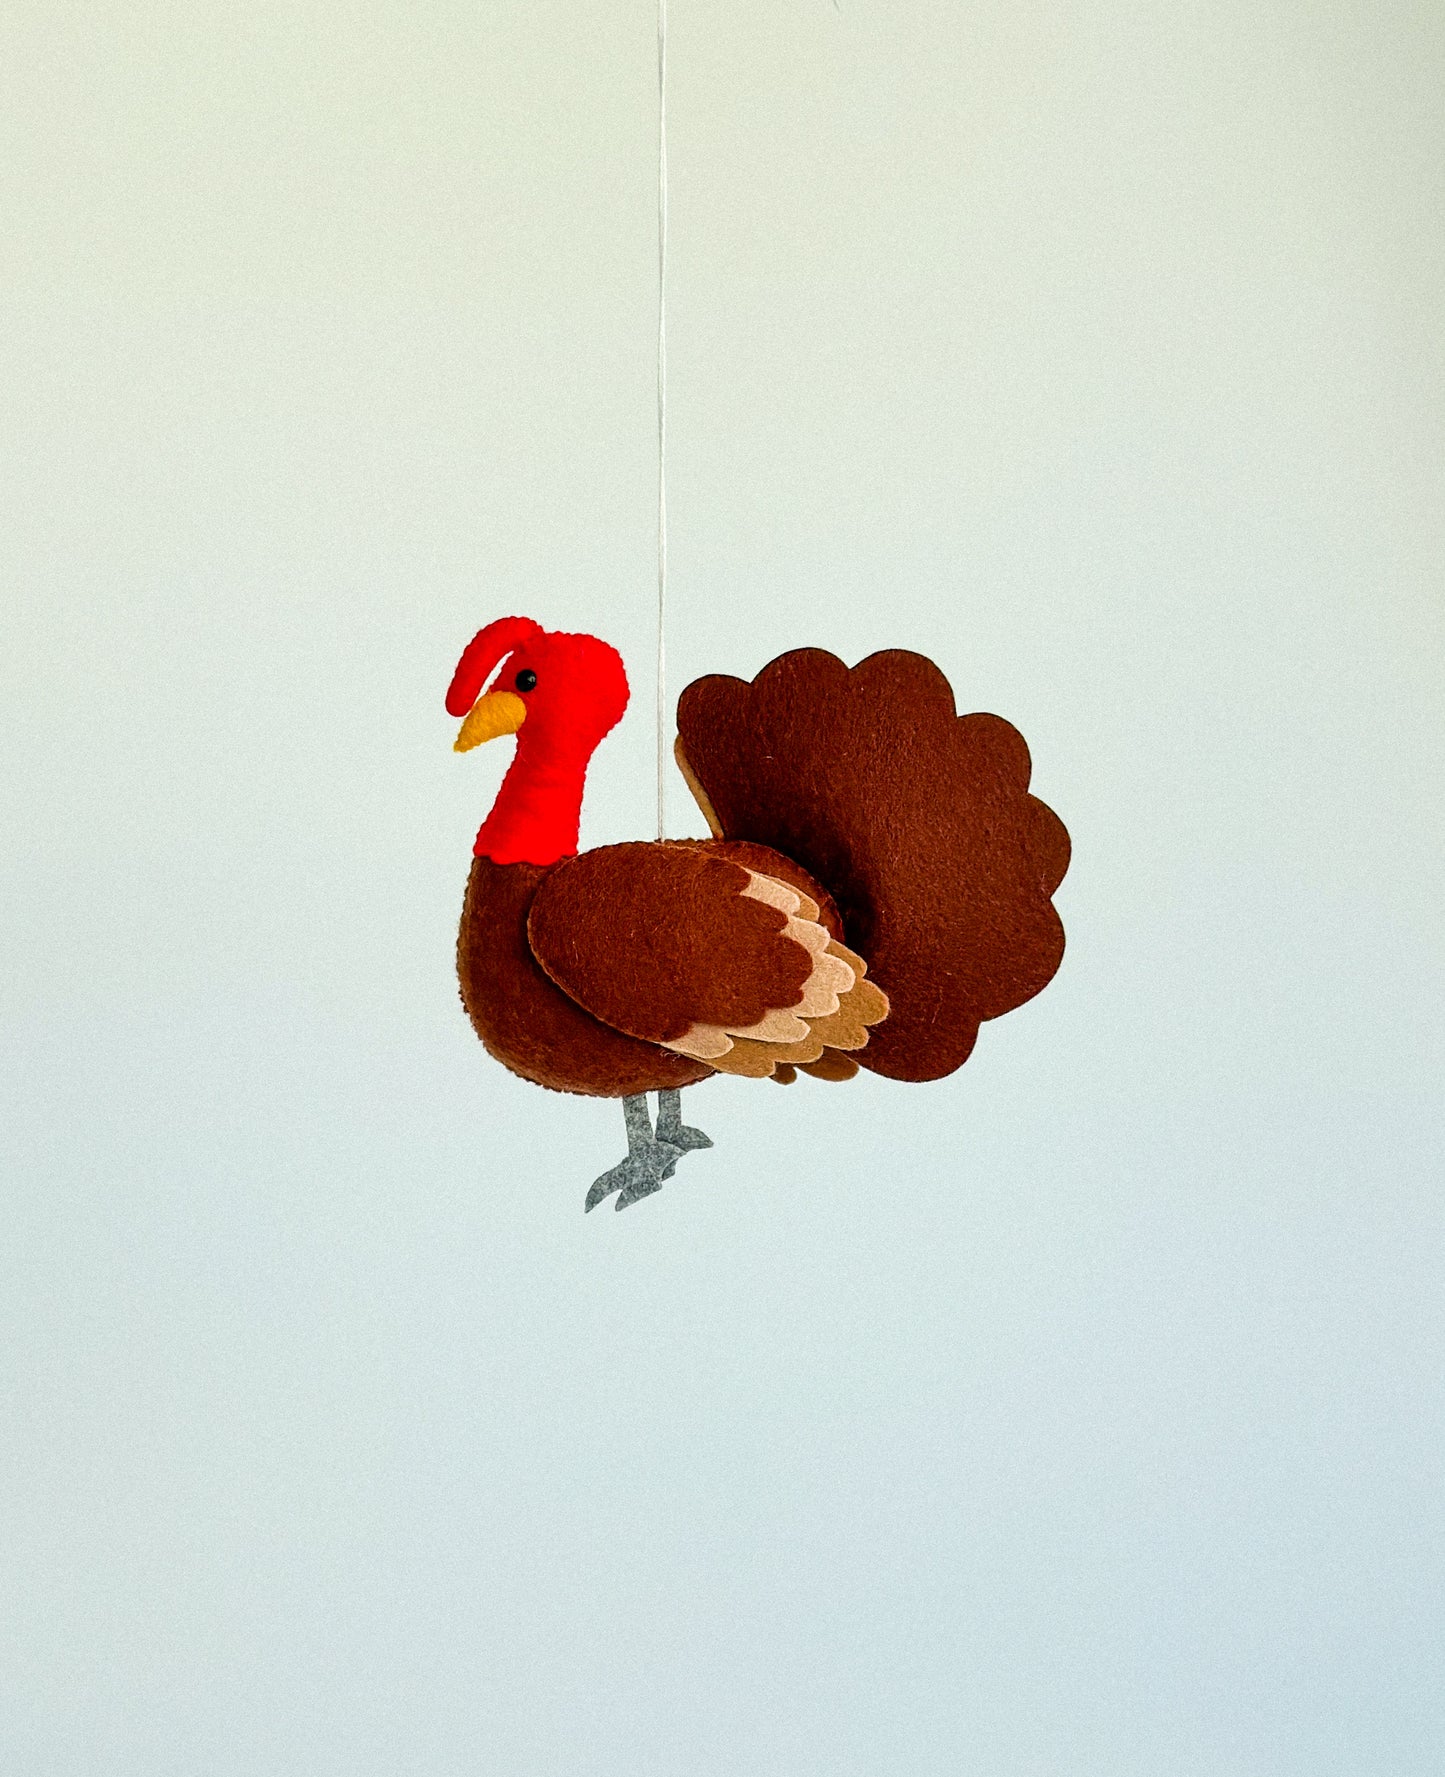 Handcrafted Felt Turkey Ornament